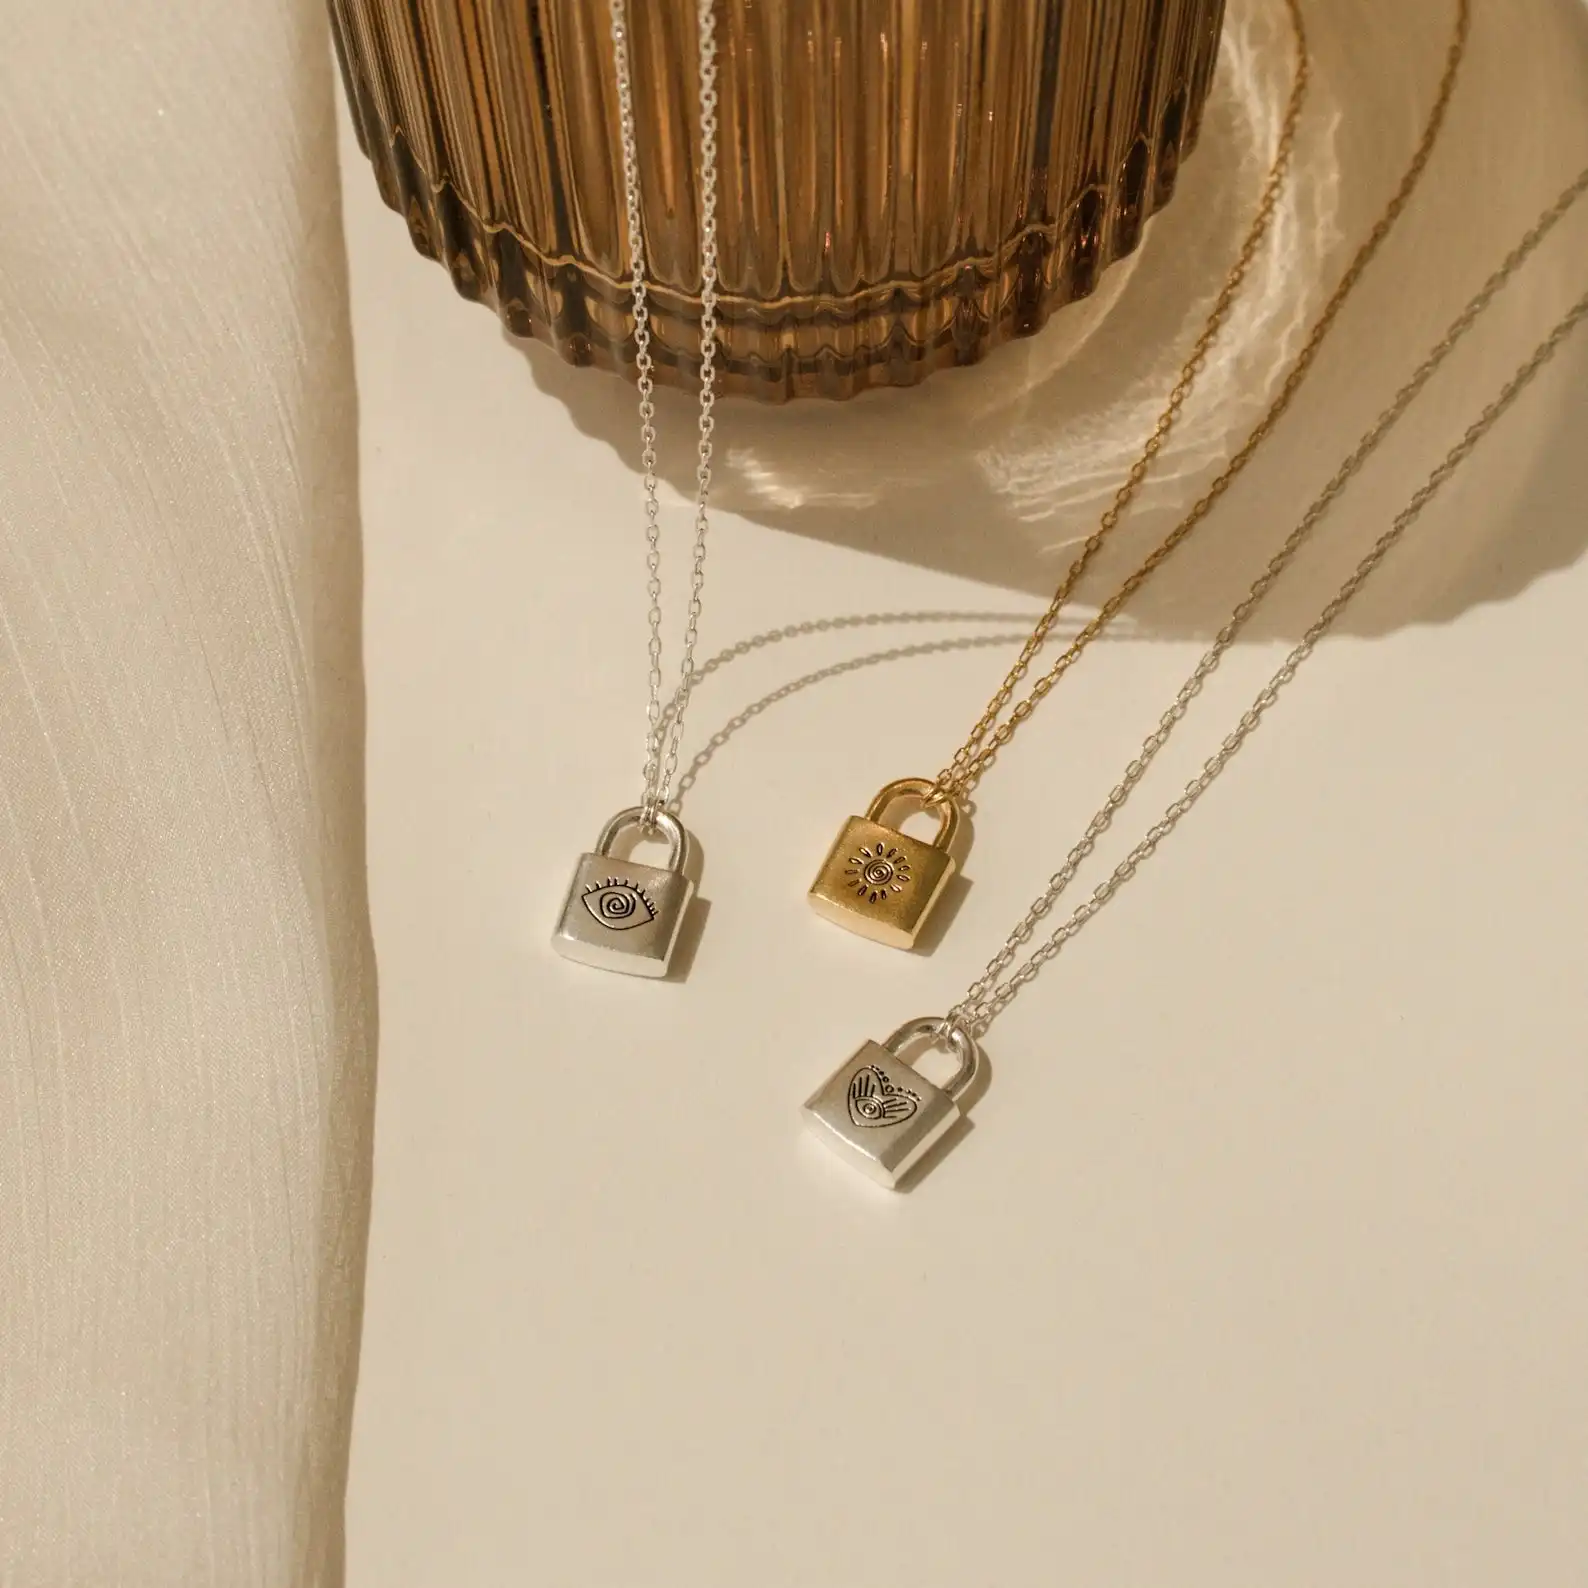 Inspire Stainless Steel Jewelry New Stylish High Polish Boho Padlock Necklace choker Tarnish Free